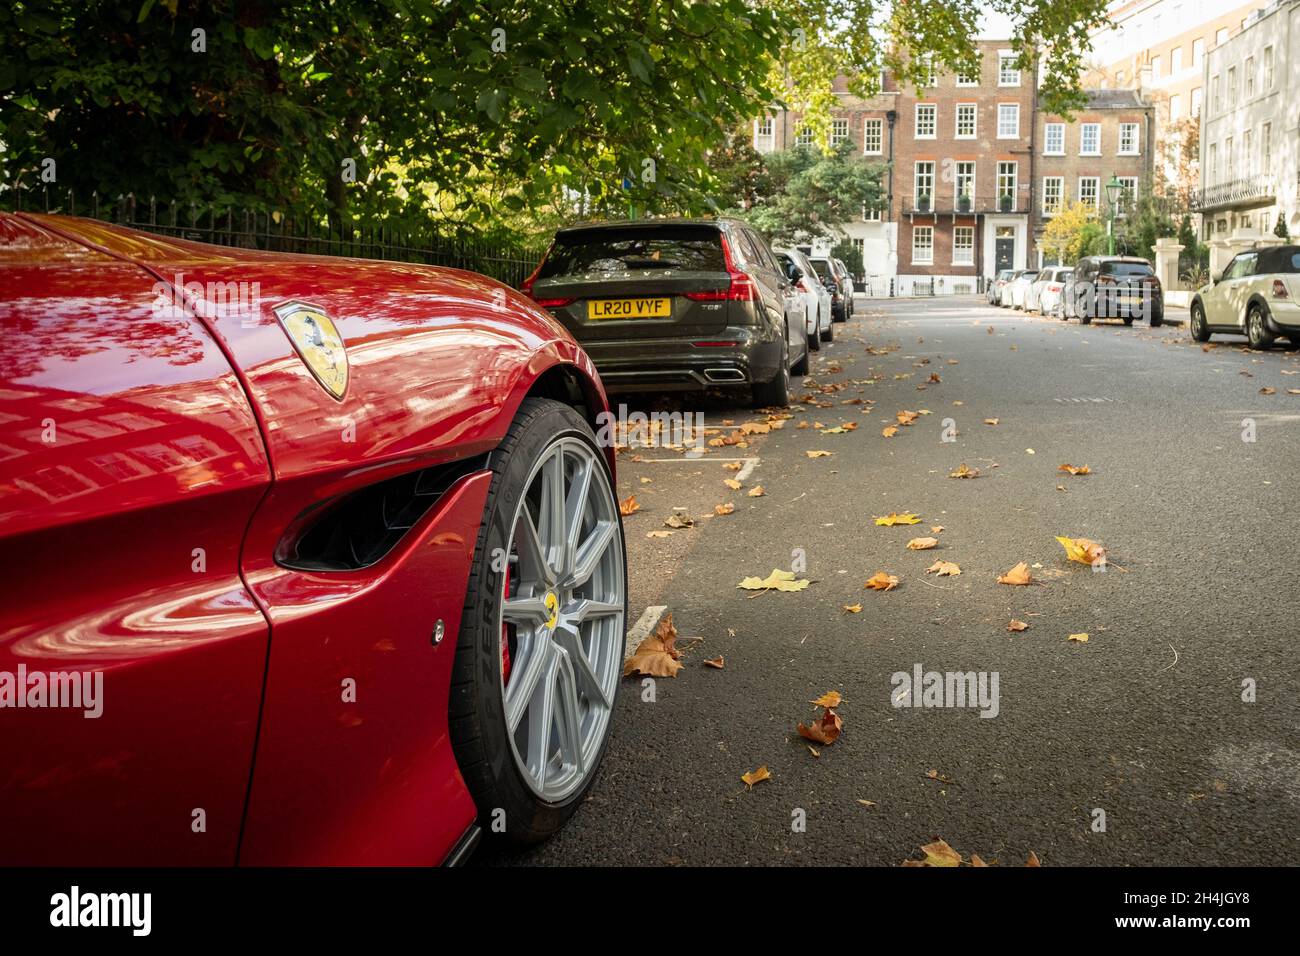 London- Red Ferrari parked on upmarket street of luxury houses in Kensington Stock Photo